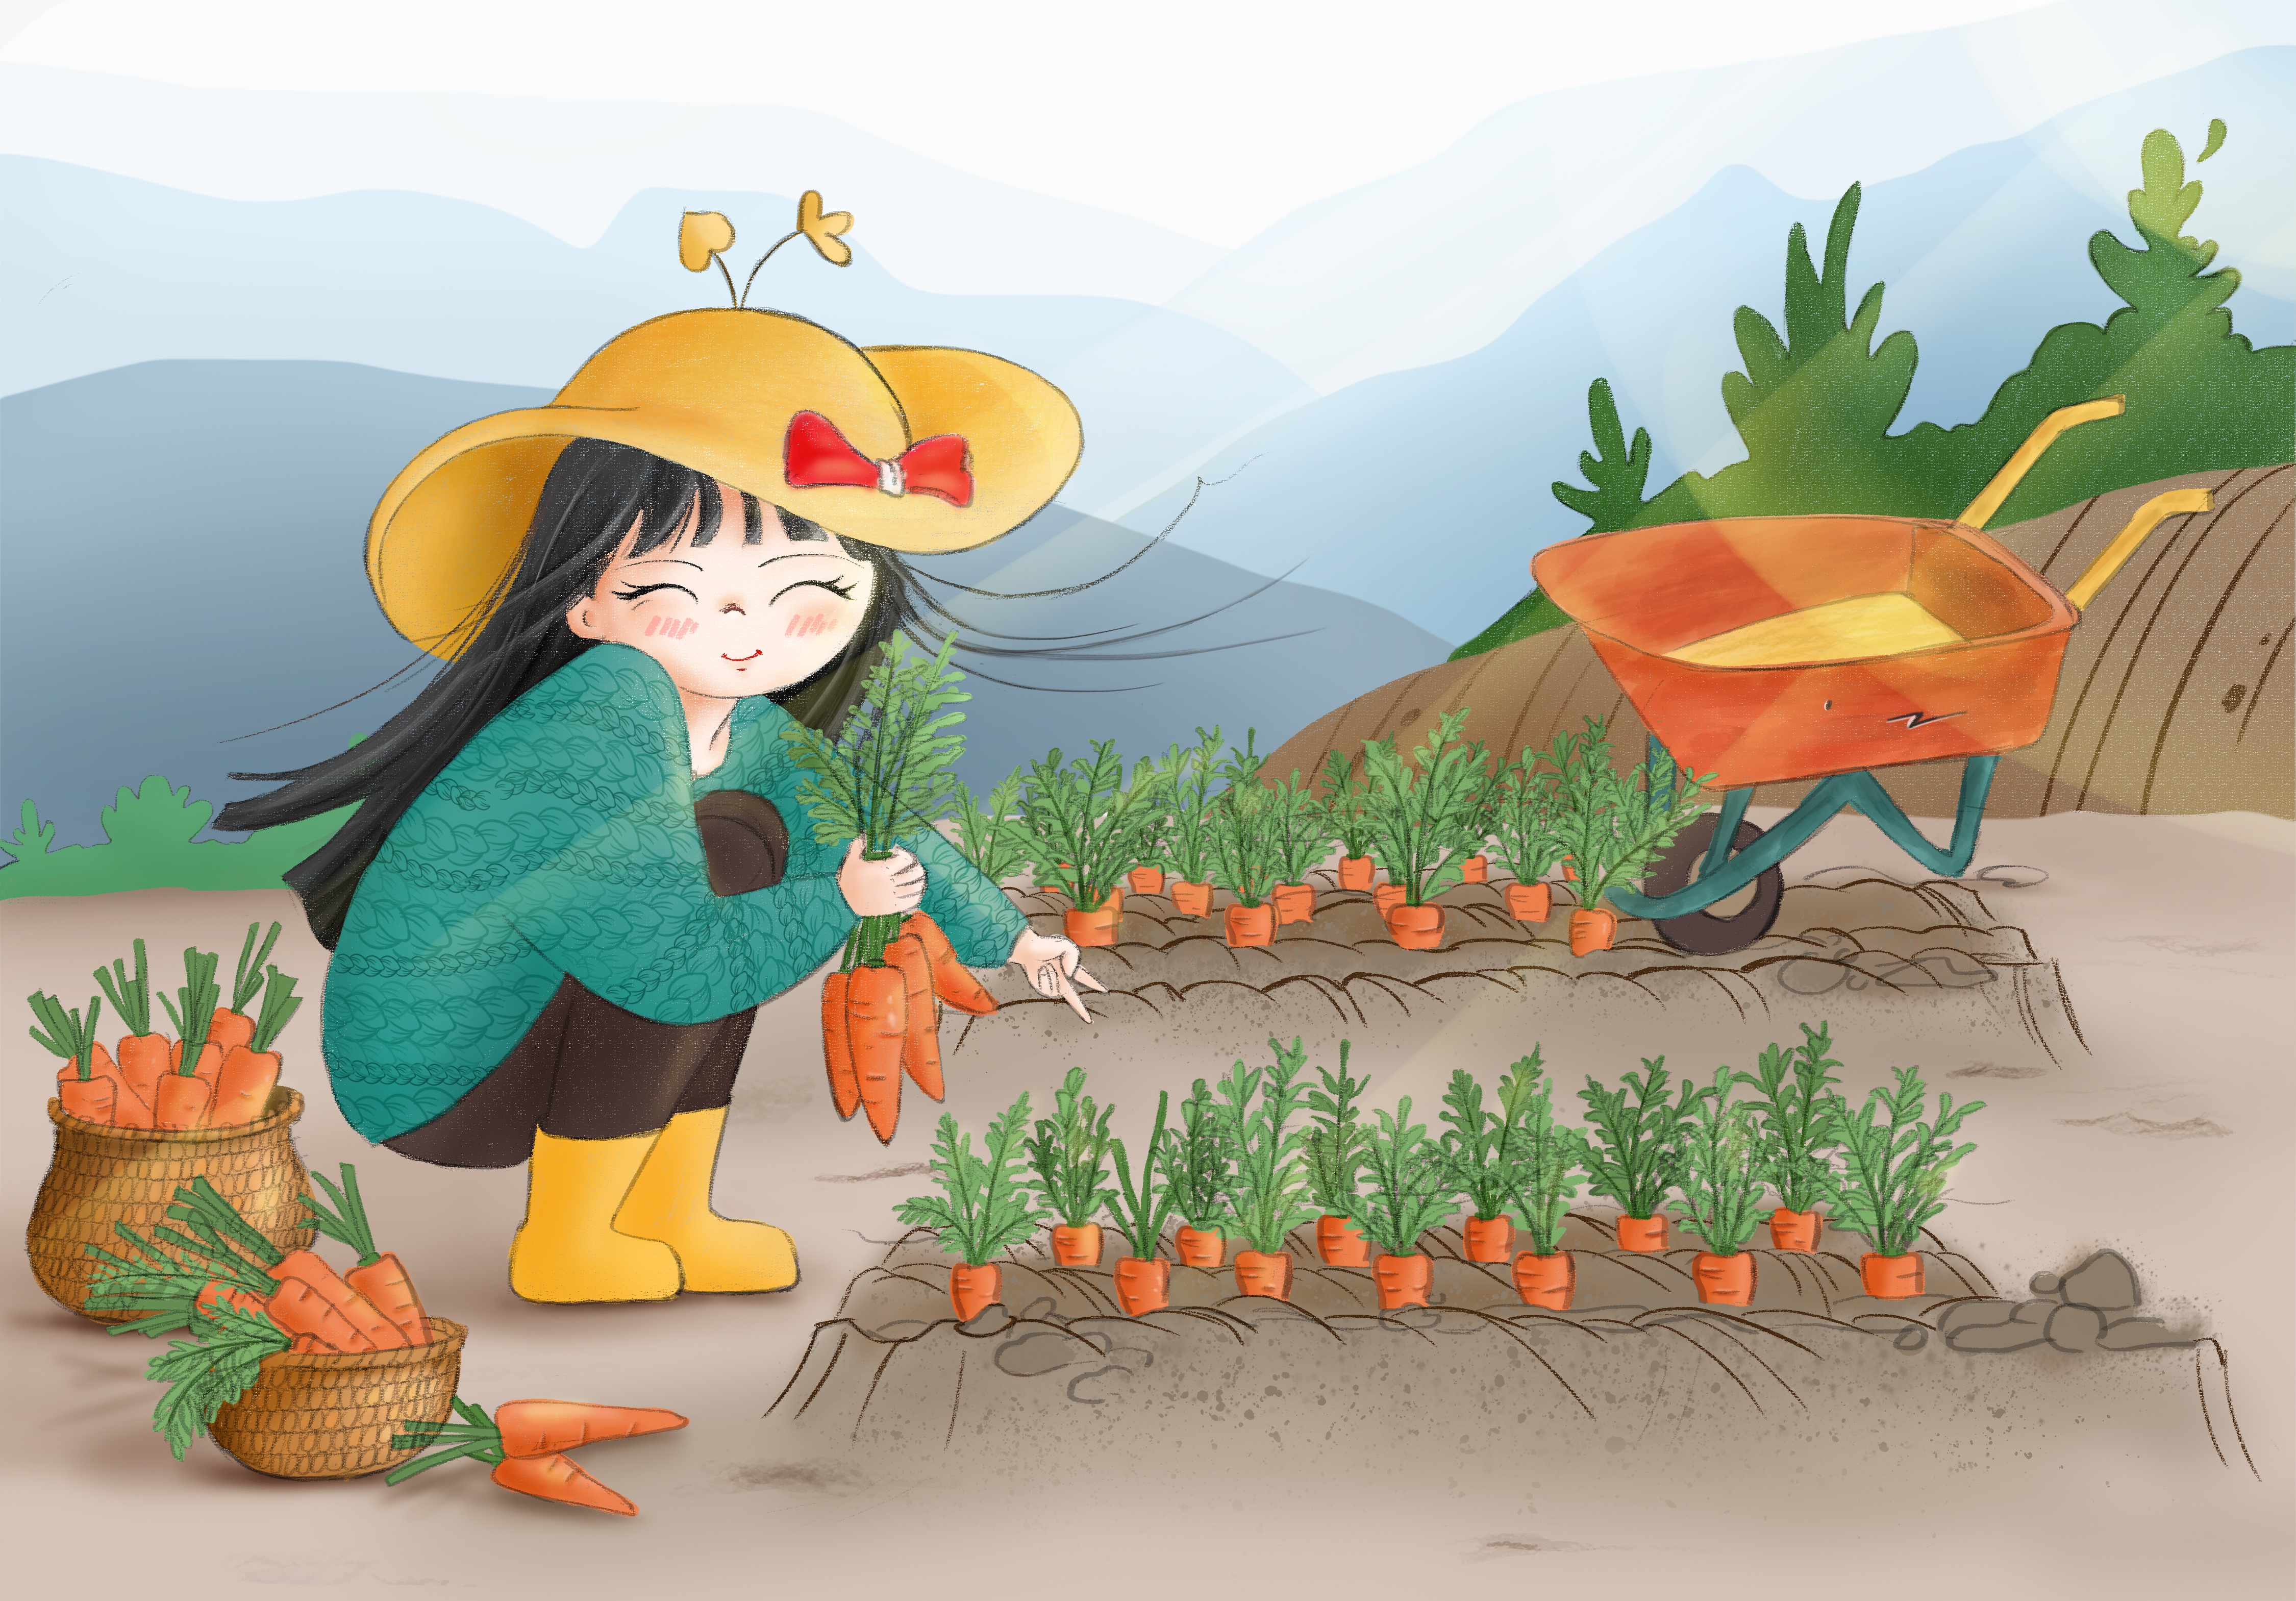 Girl pulling carrots from a vegetable garden illustration